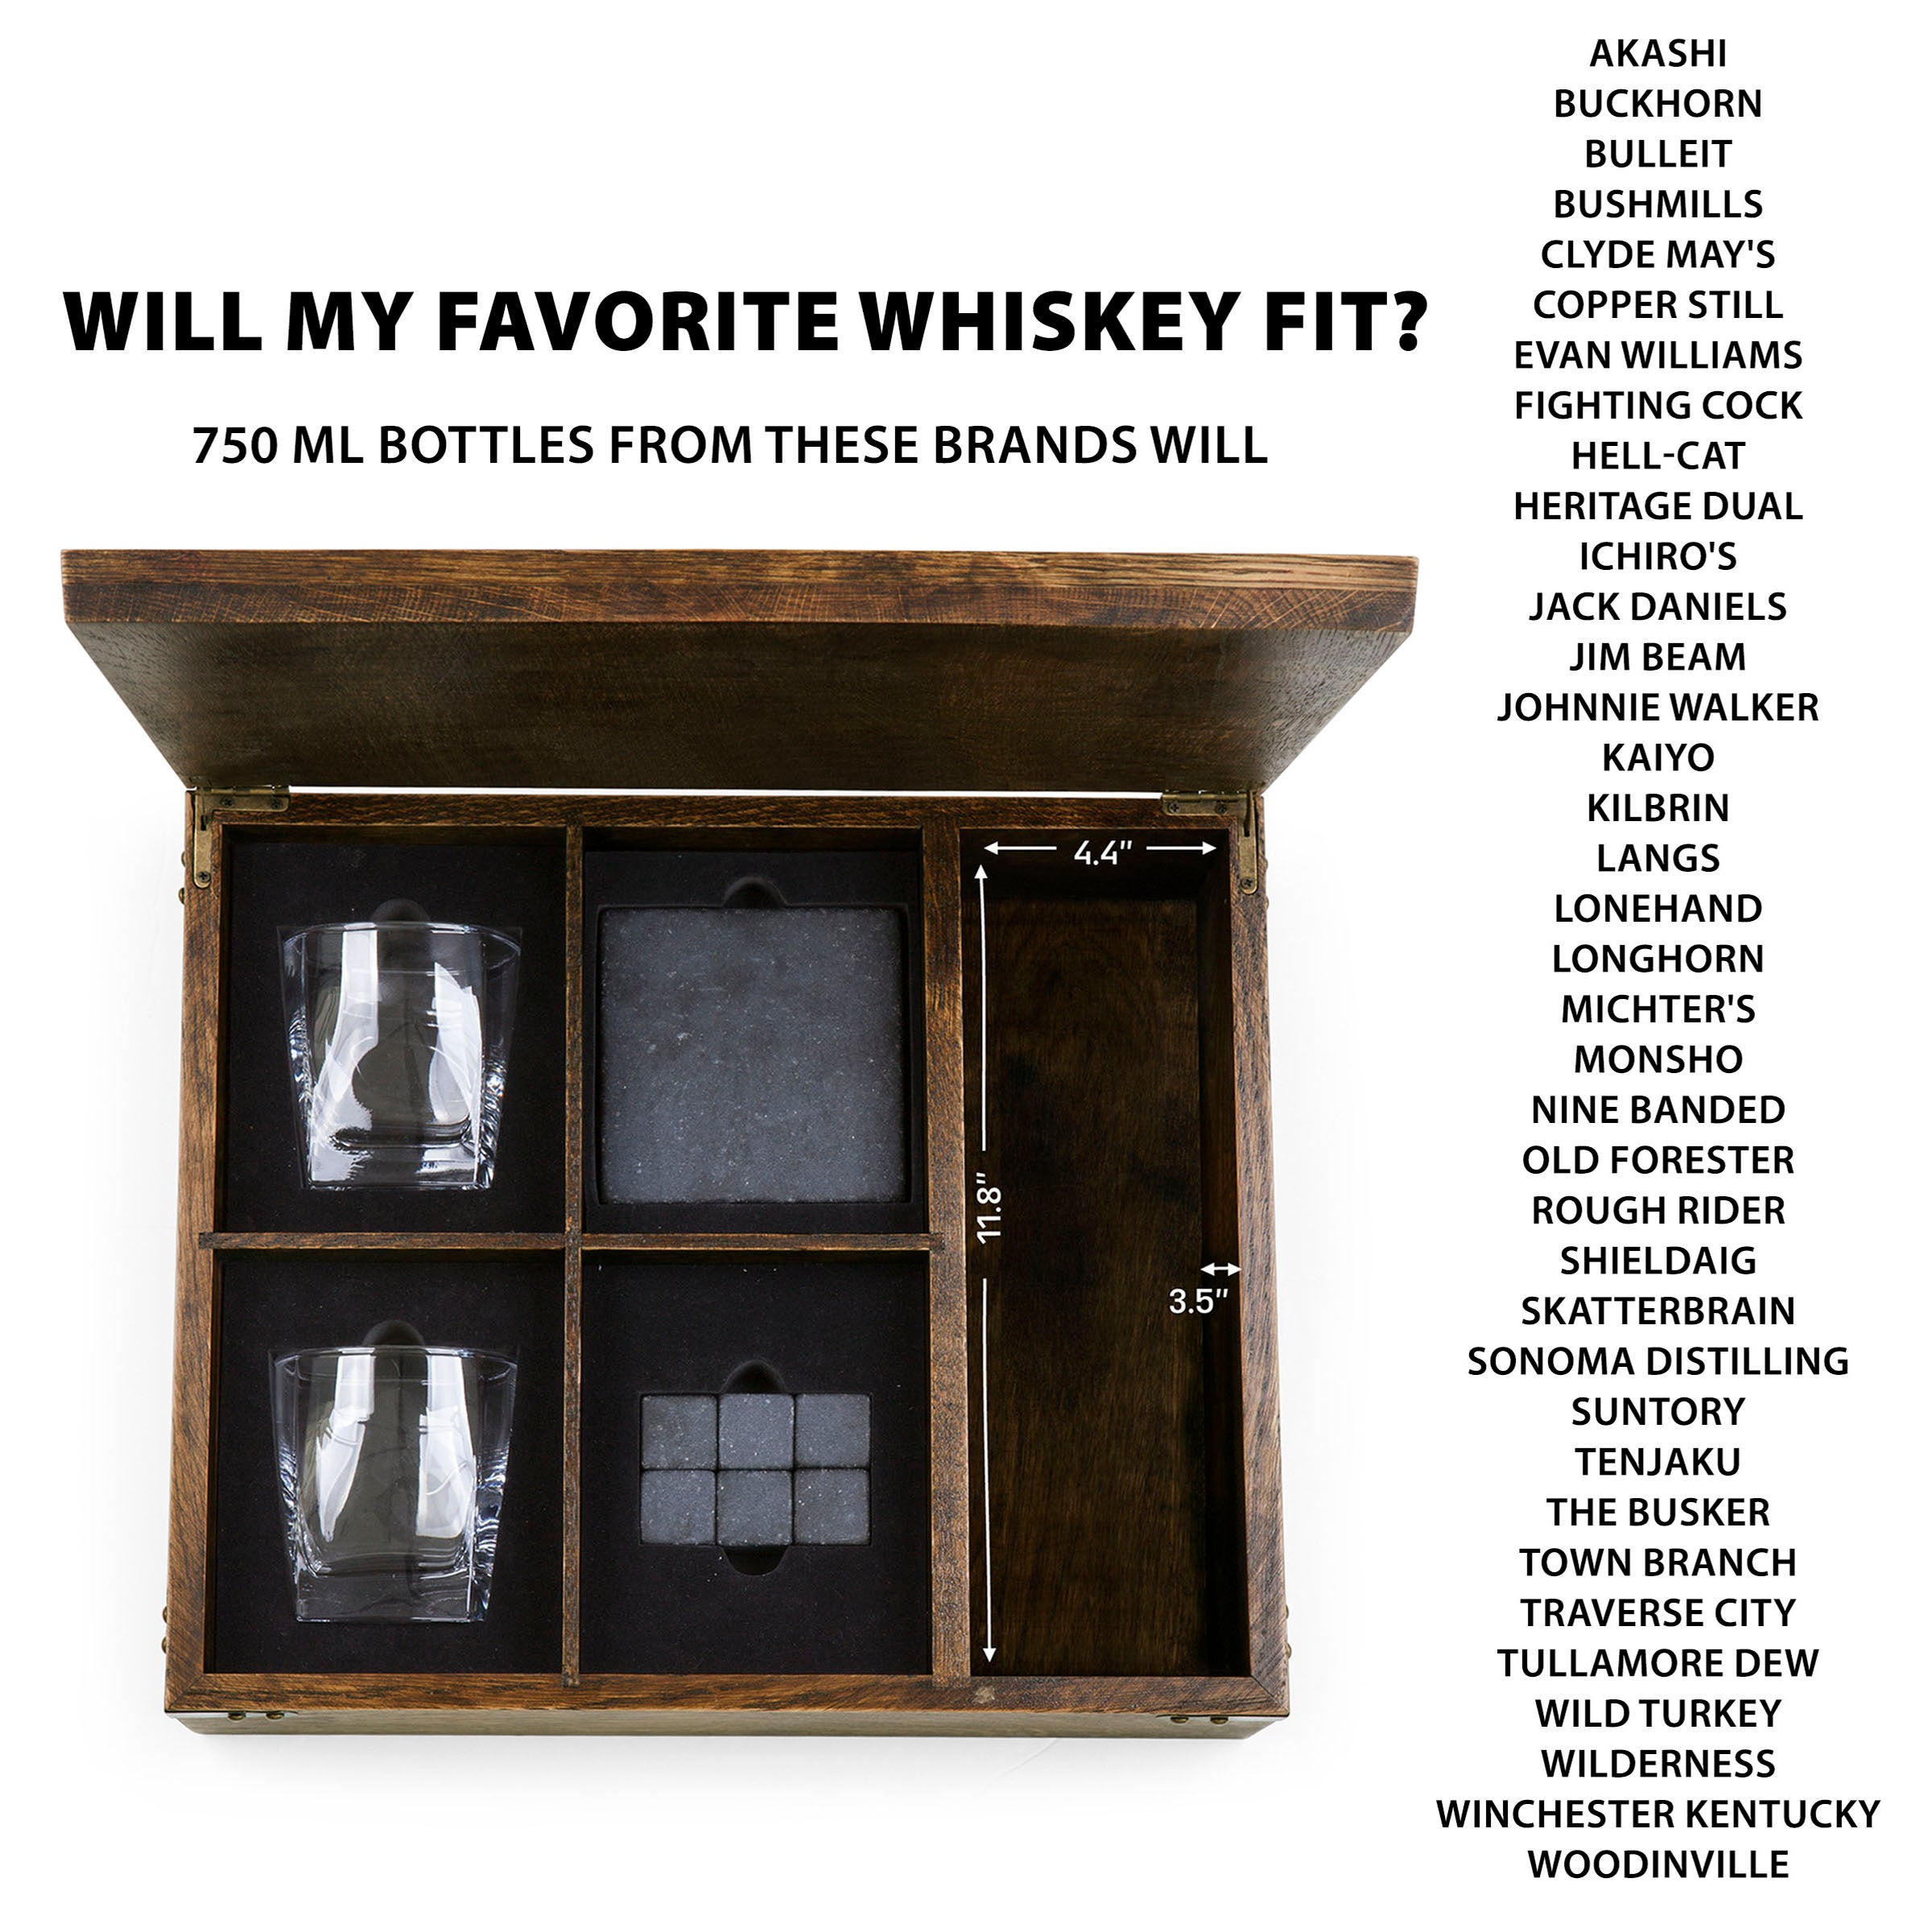 Arizona Cardinals - Whiskey Box Gift Set